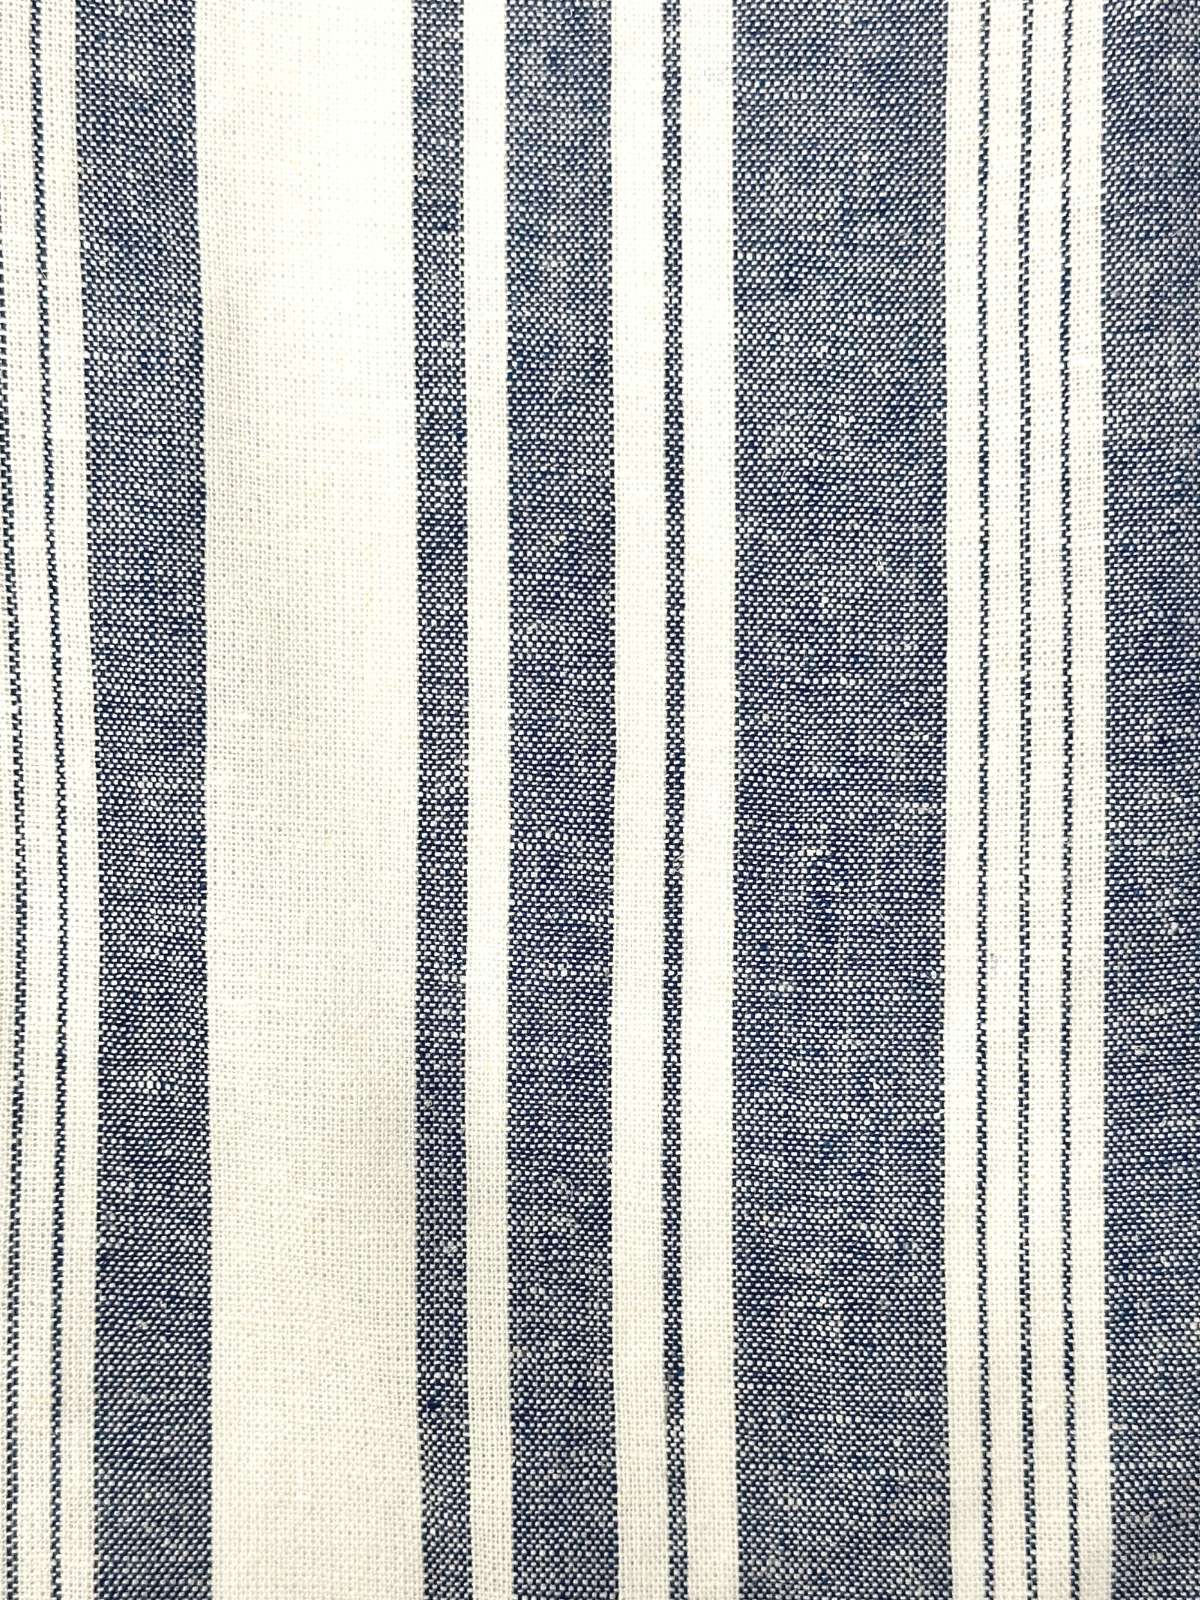 Josh Stripe Linen Short - Blue/White